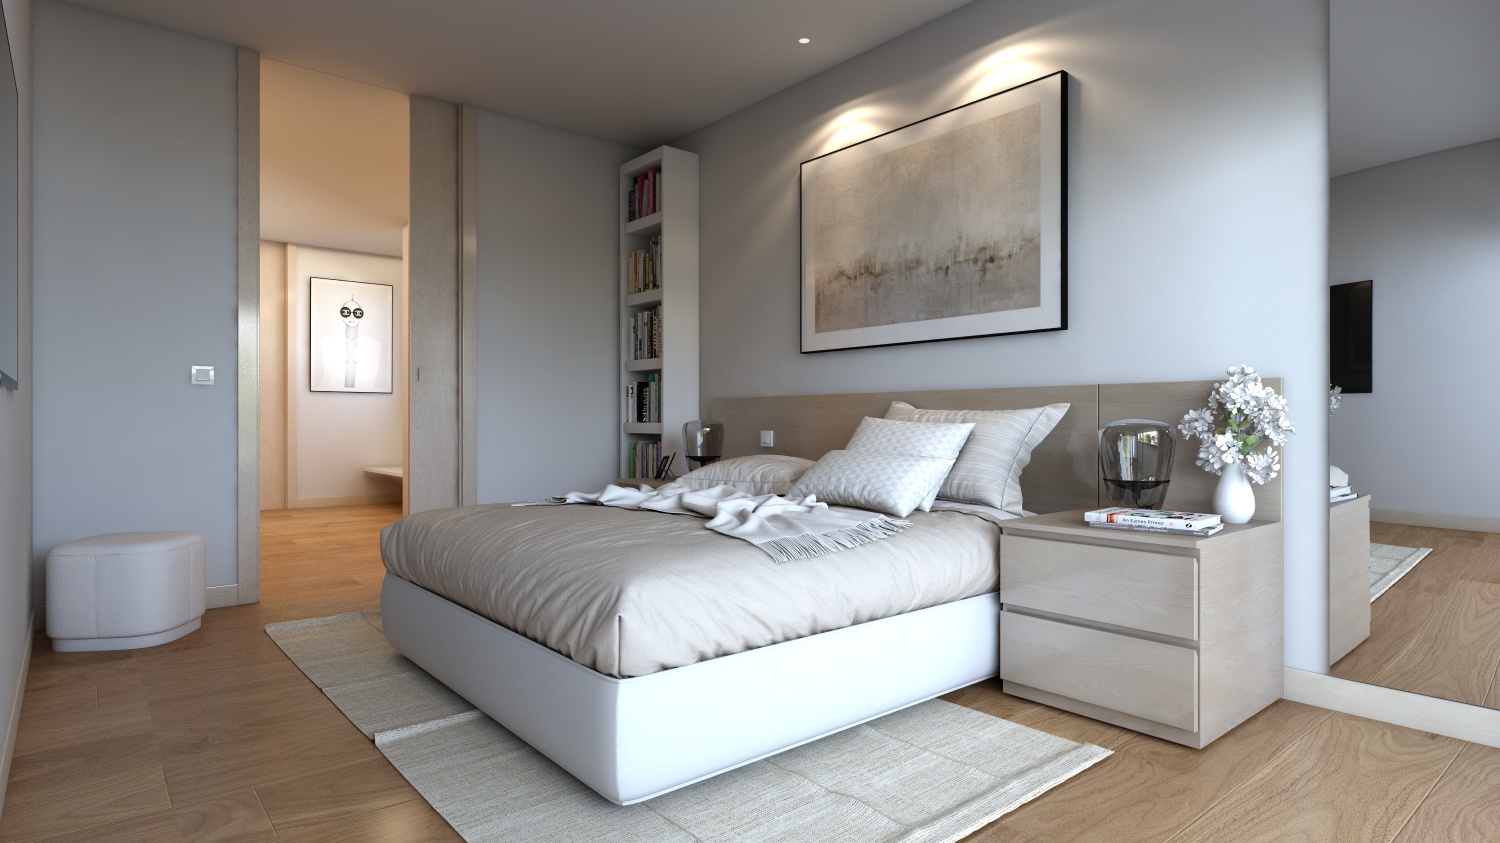 Bedroom render image of a block of flats in Lleida by GAYARRE infografia